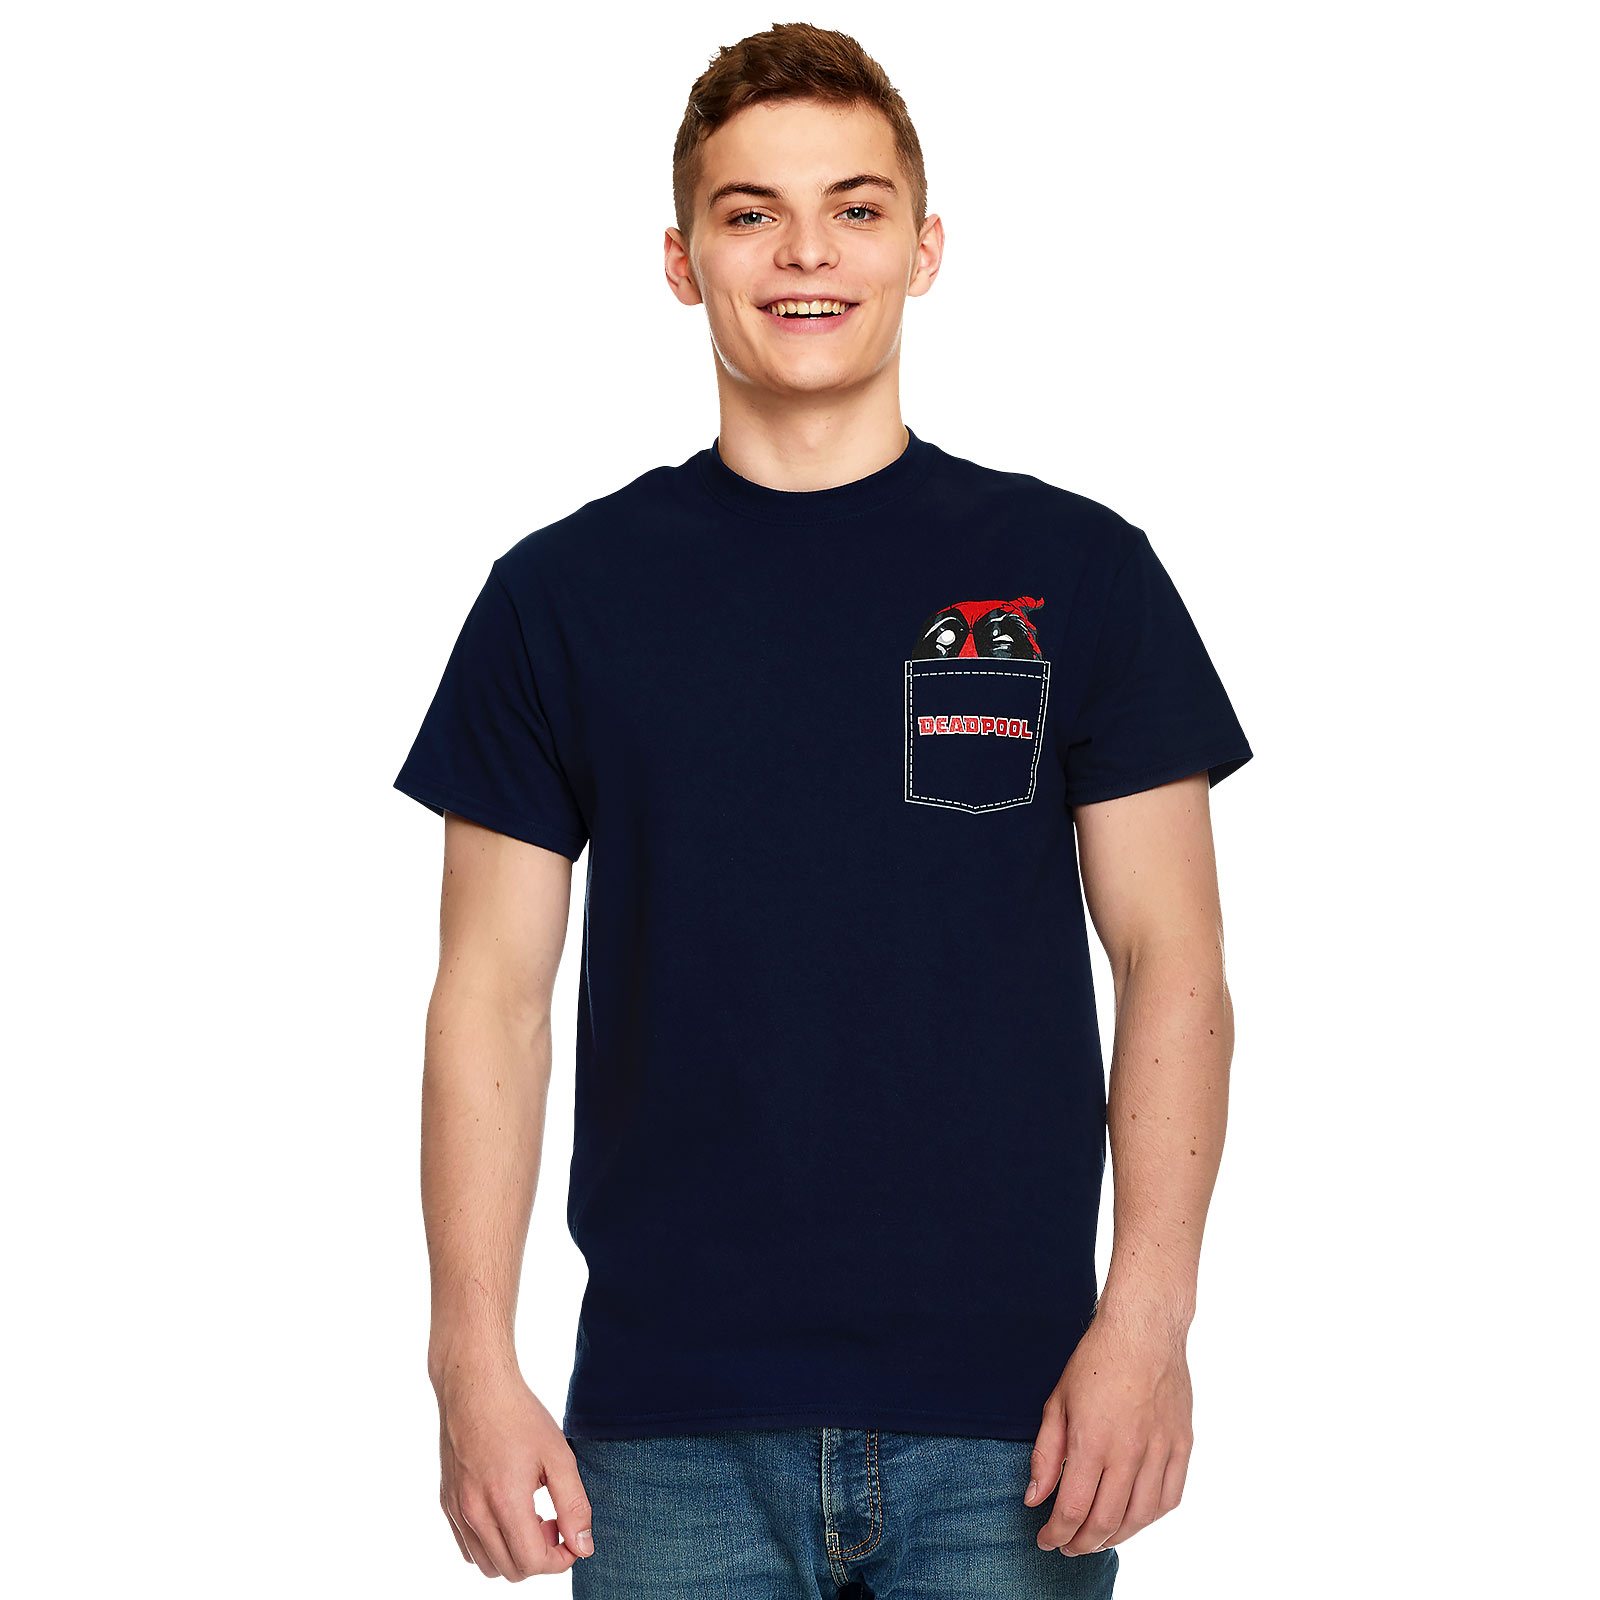 Deadpool - T-shirt de poche bleu